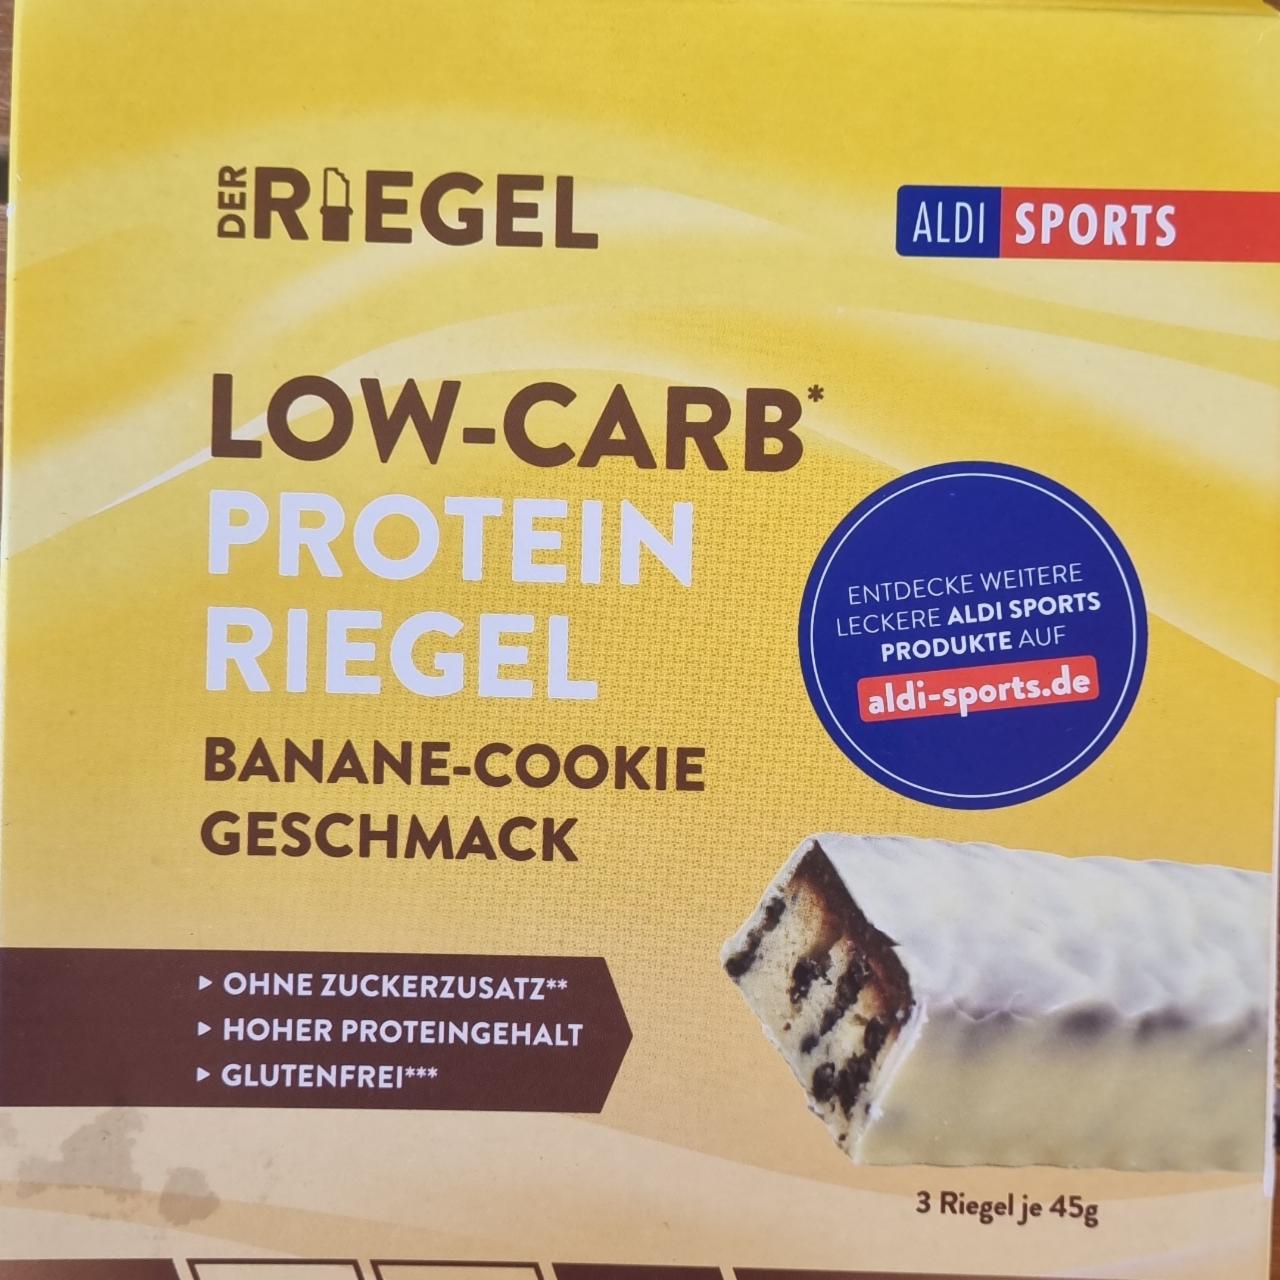 Fotografie - Low-carb Protein Riegel Banane-Cookie Aldi Sports